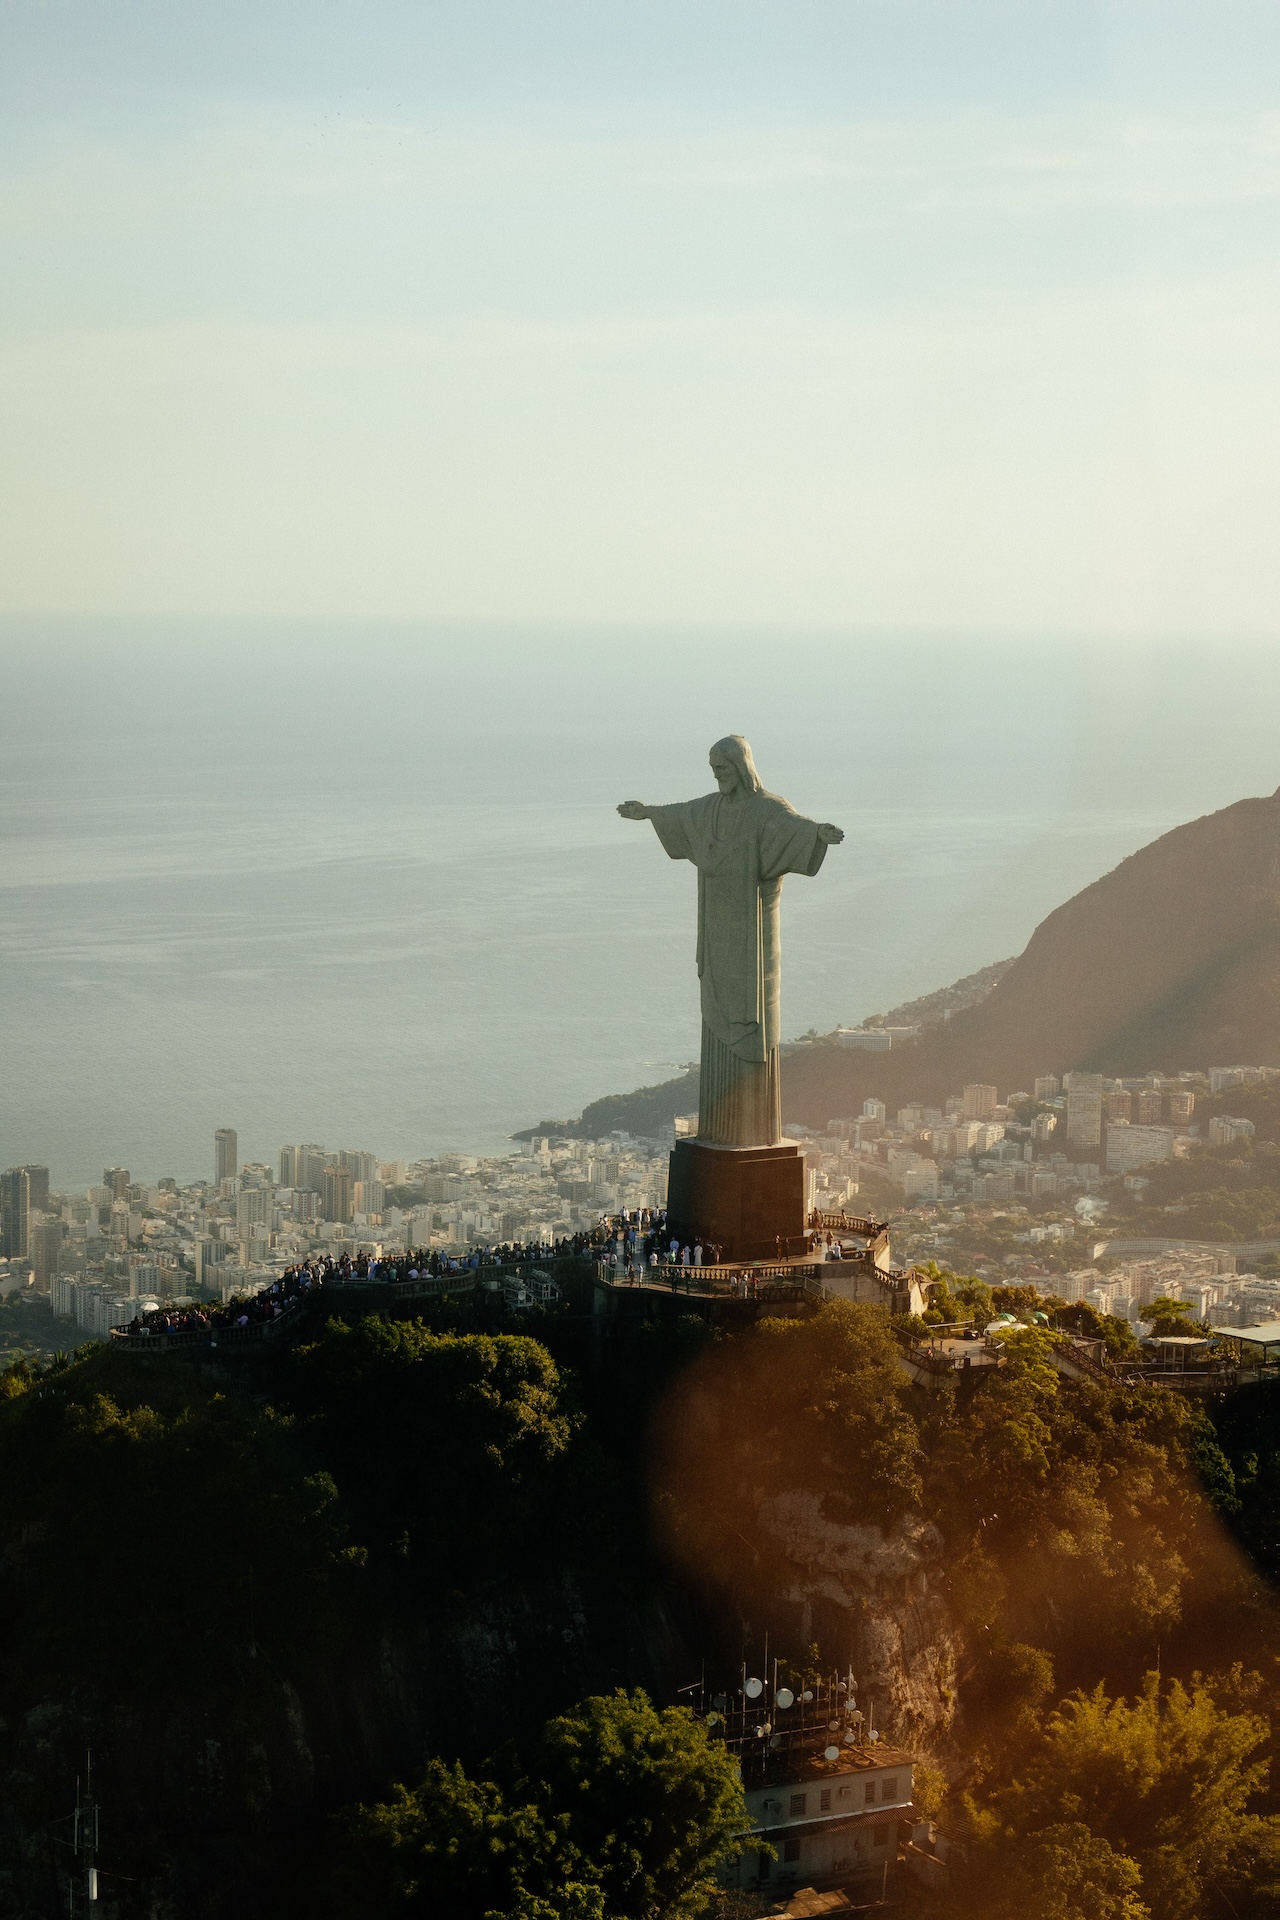 Statue of Christ the Redemptor overlooks the city of Rio de Janeiro